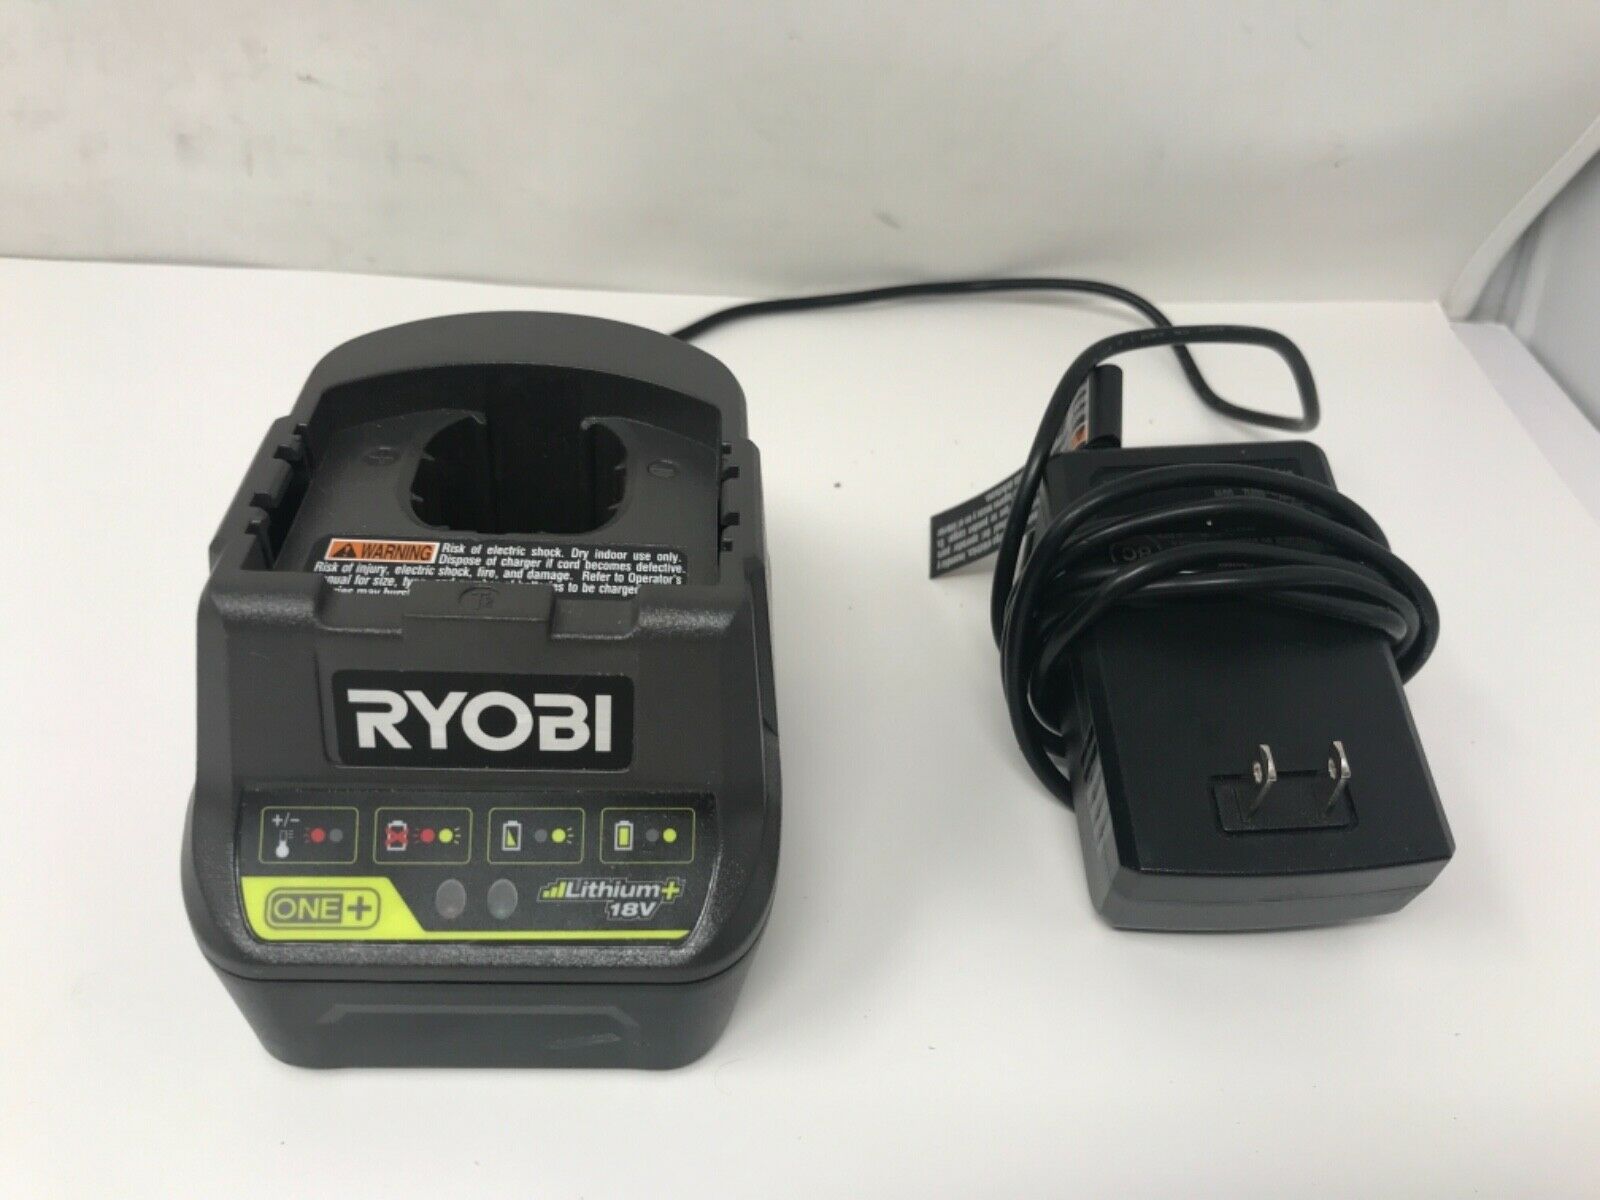 Ryobi P118b One+ 18v Li-ion Dual Chemistry Battery Charger